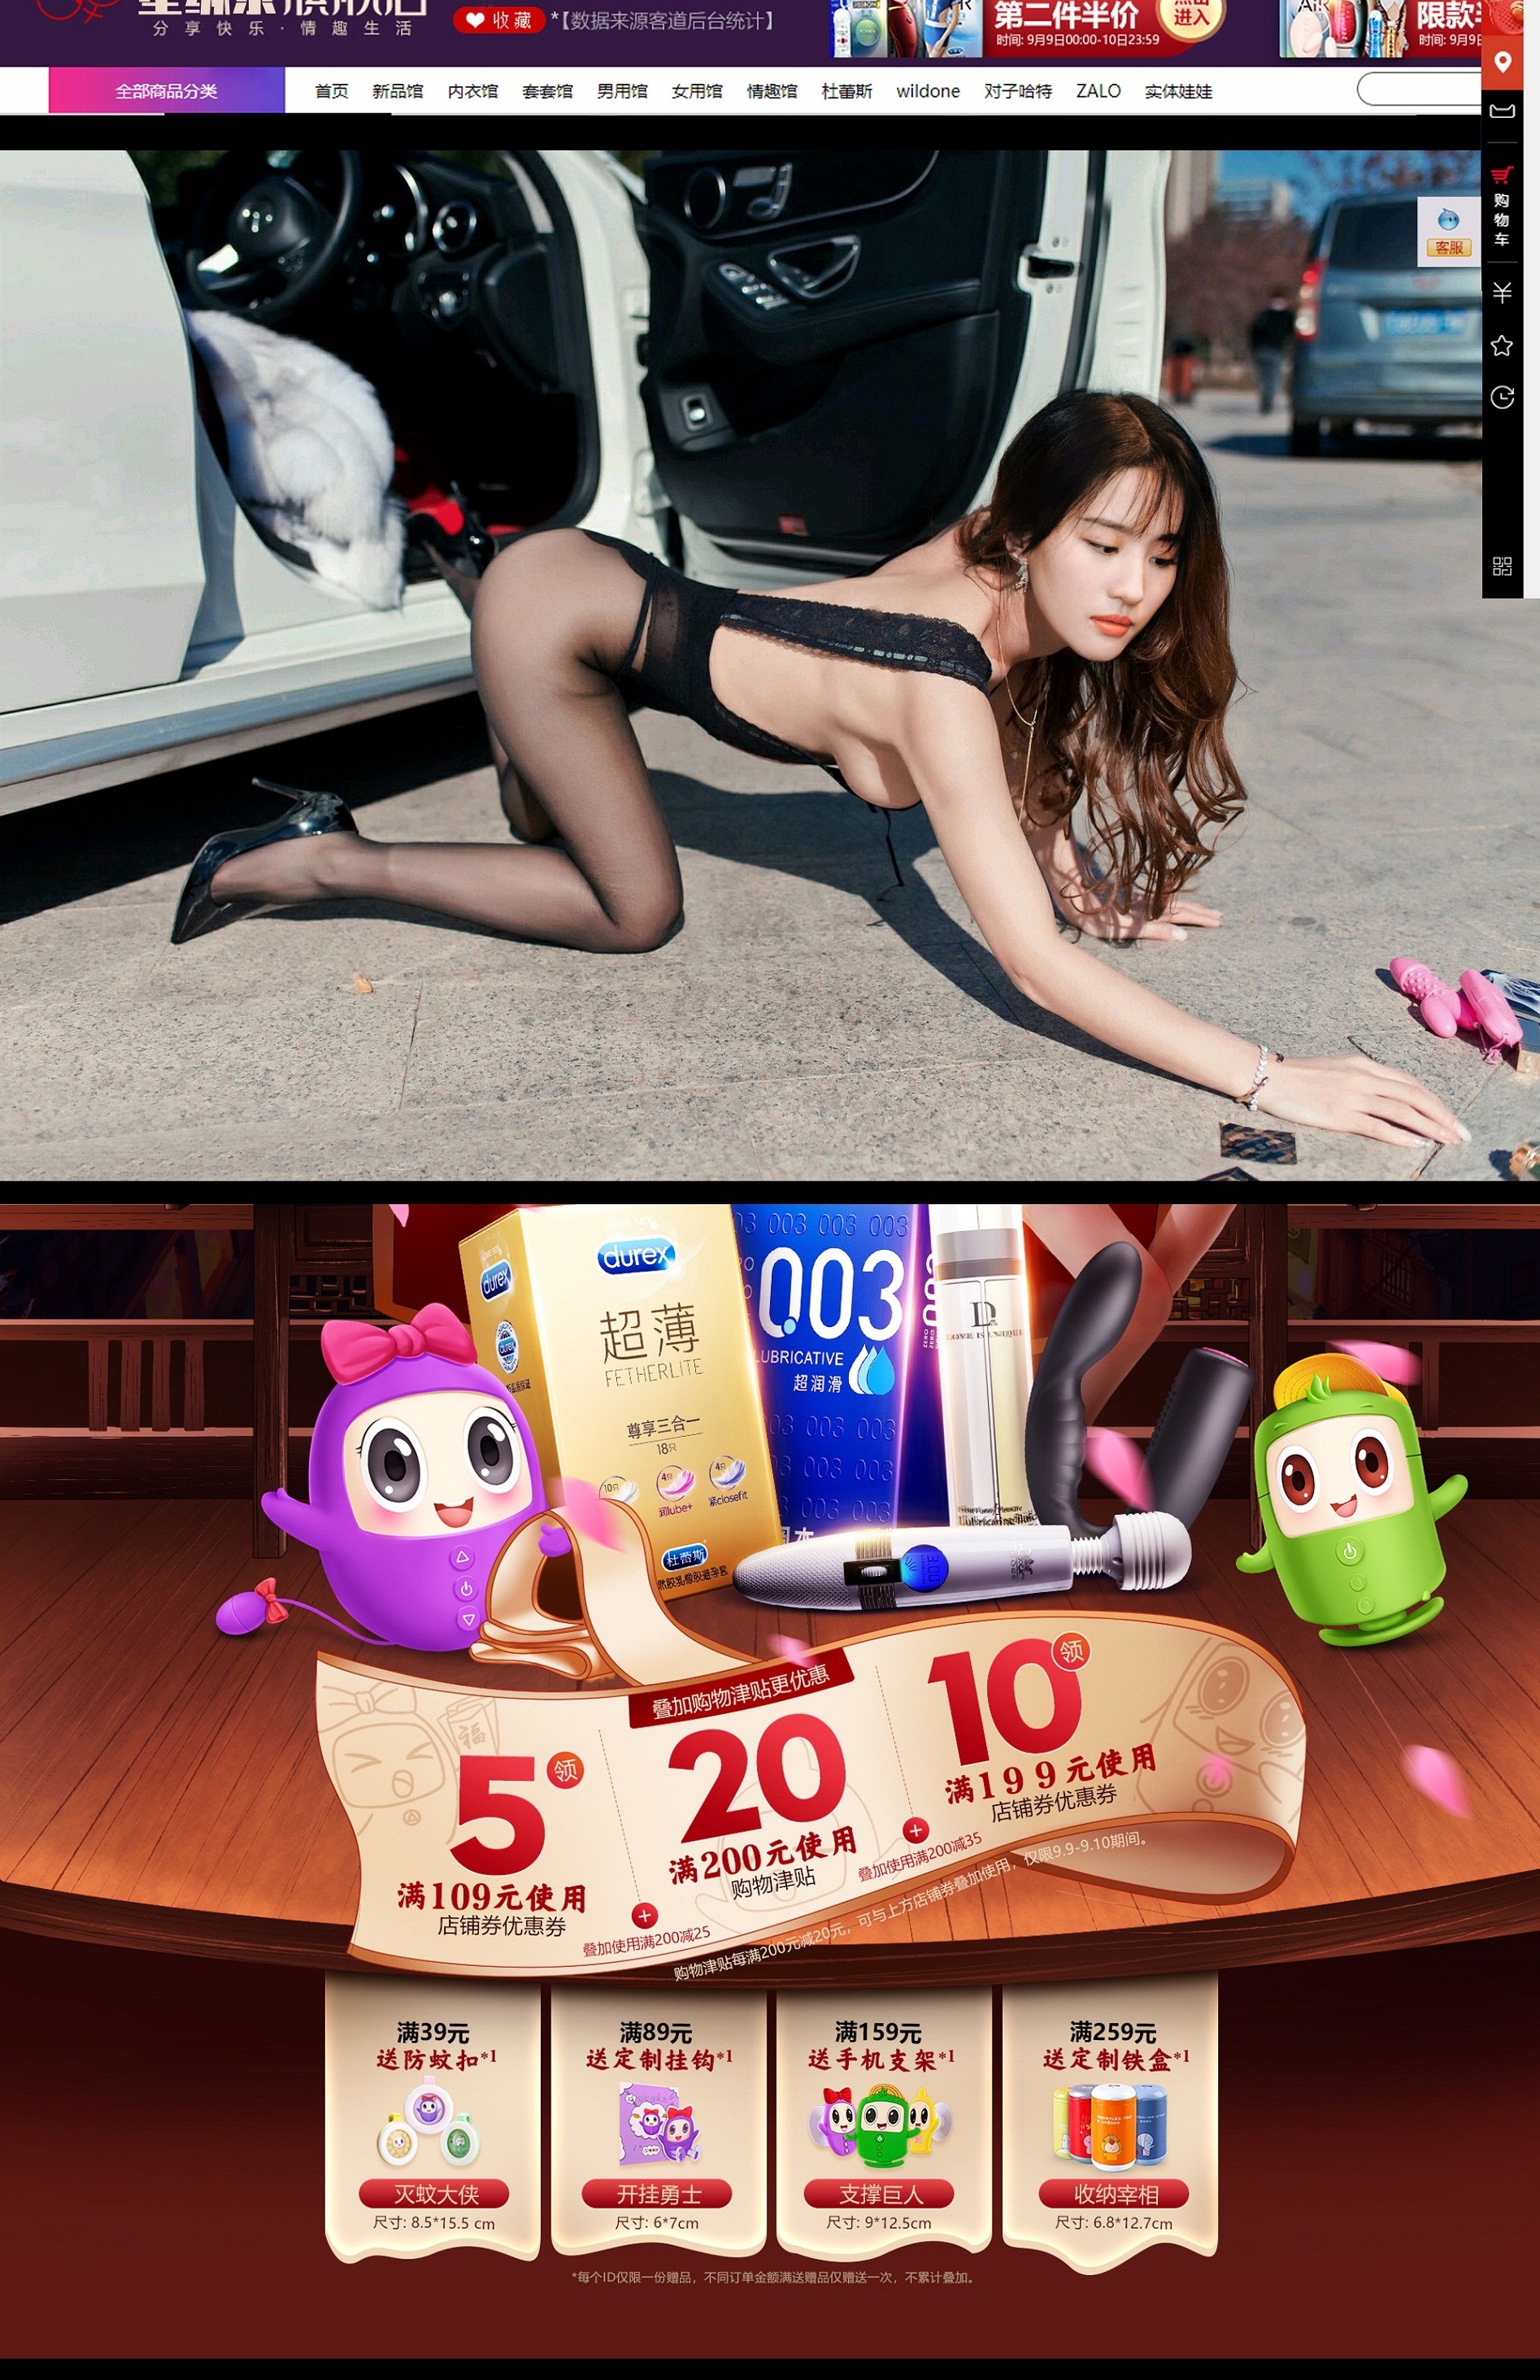 [Live action comics] [Spoof] A Taobao advertisement